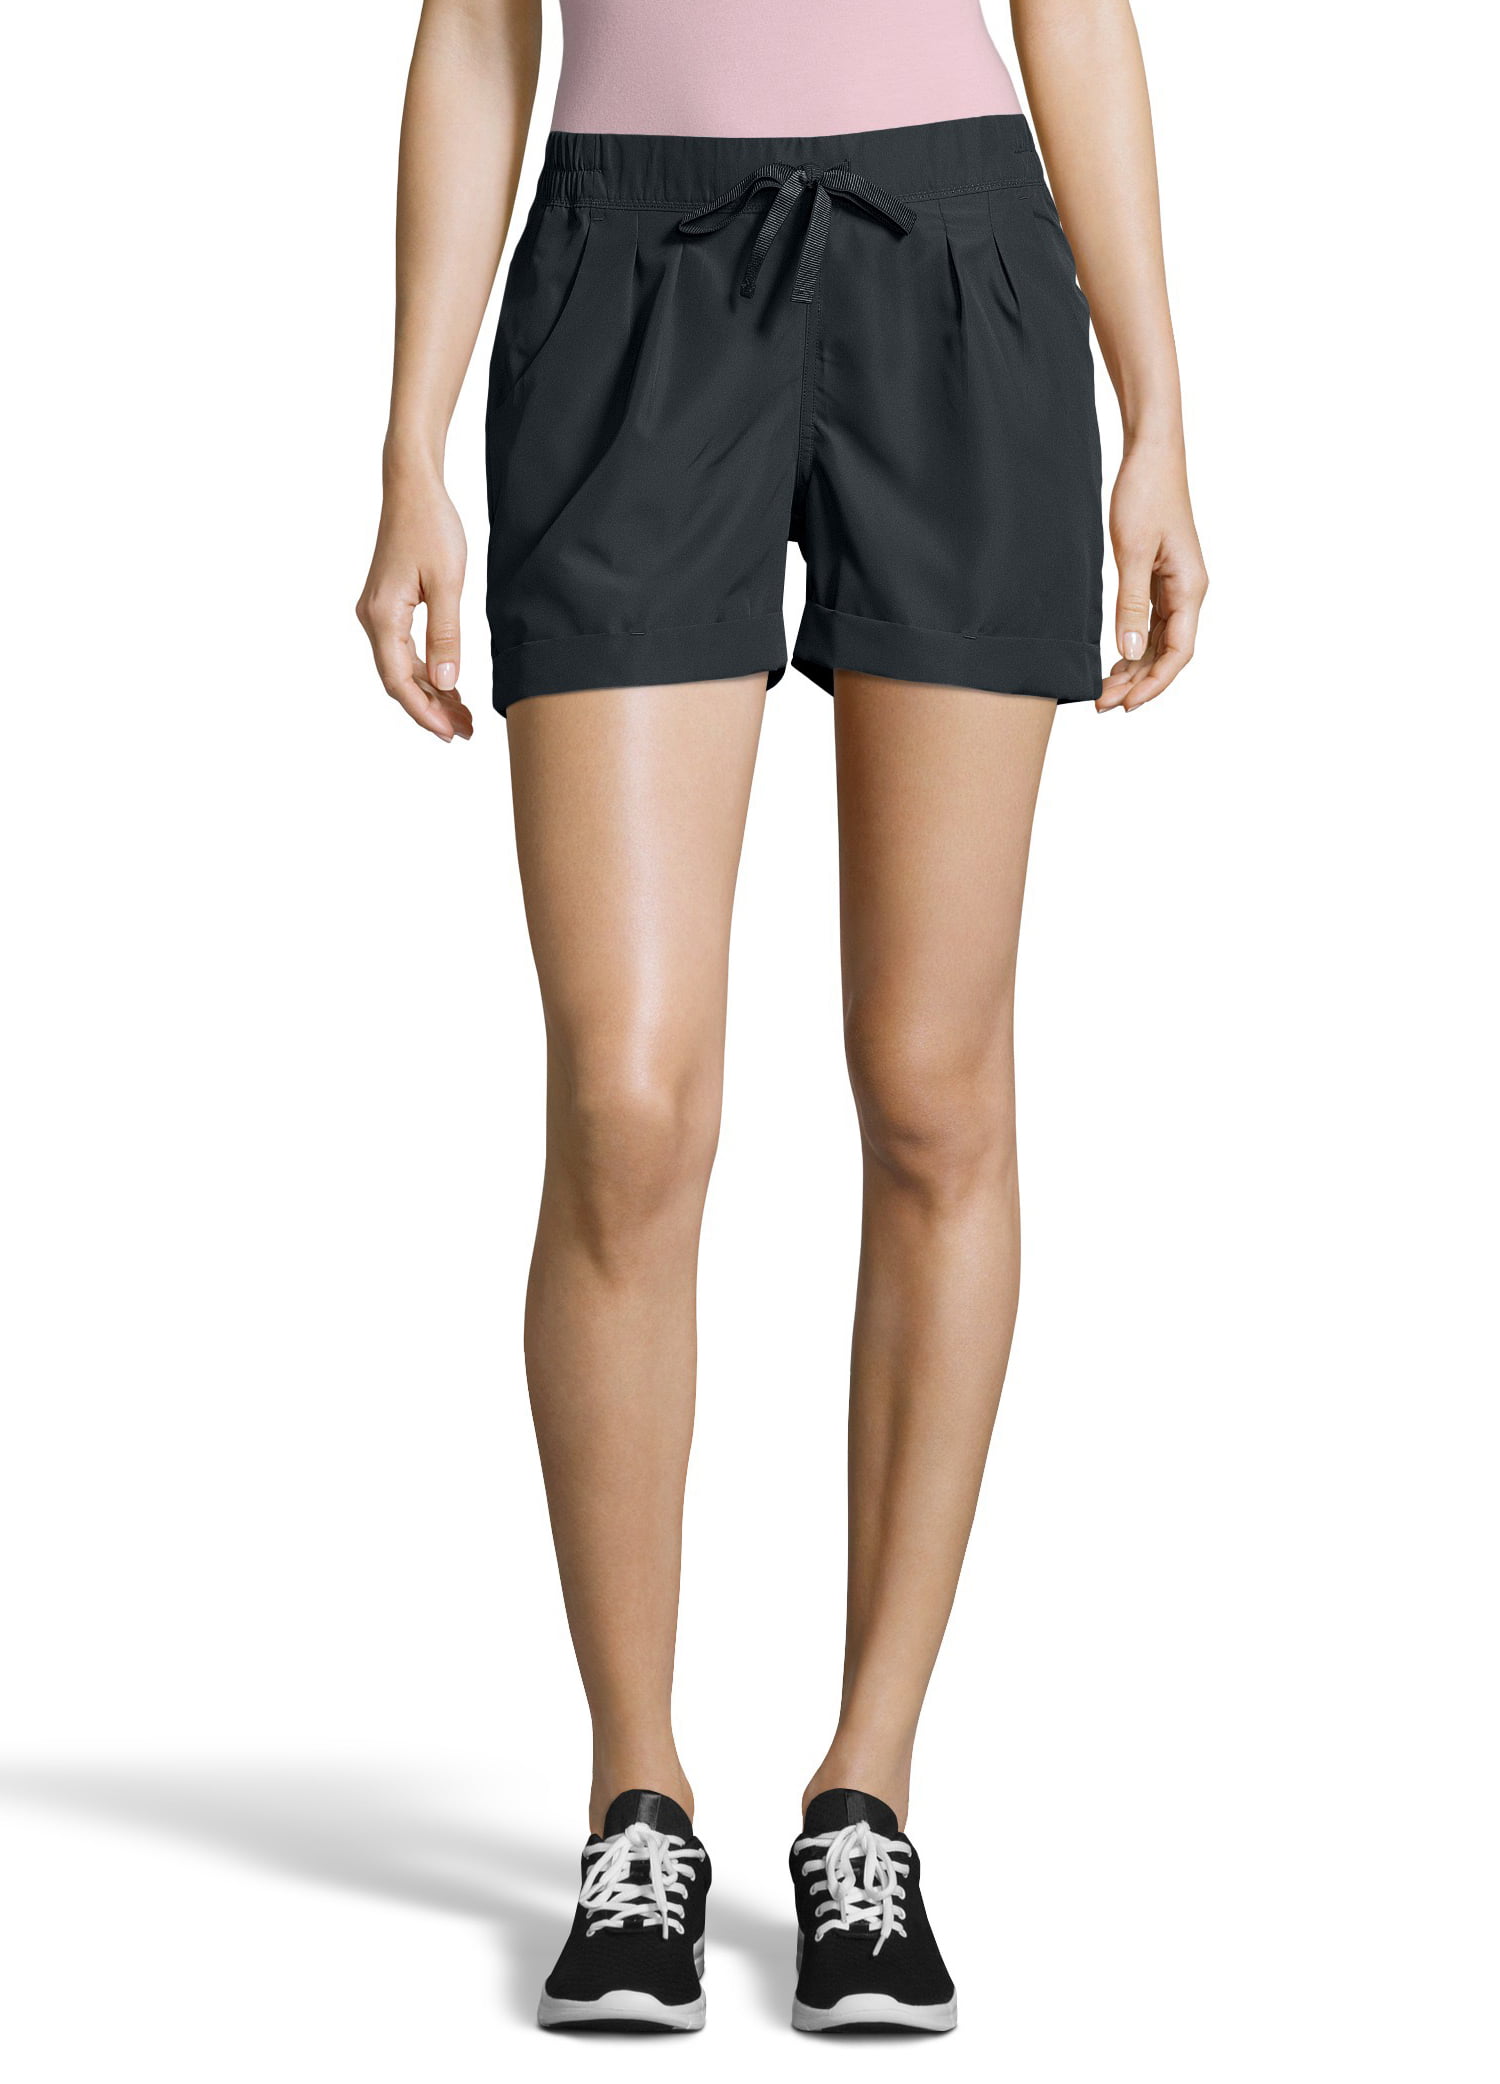 Hanes Sport Women's Performance Woven Shorts - Walmart.com